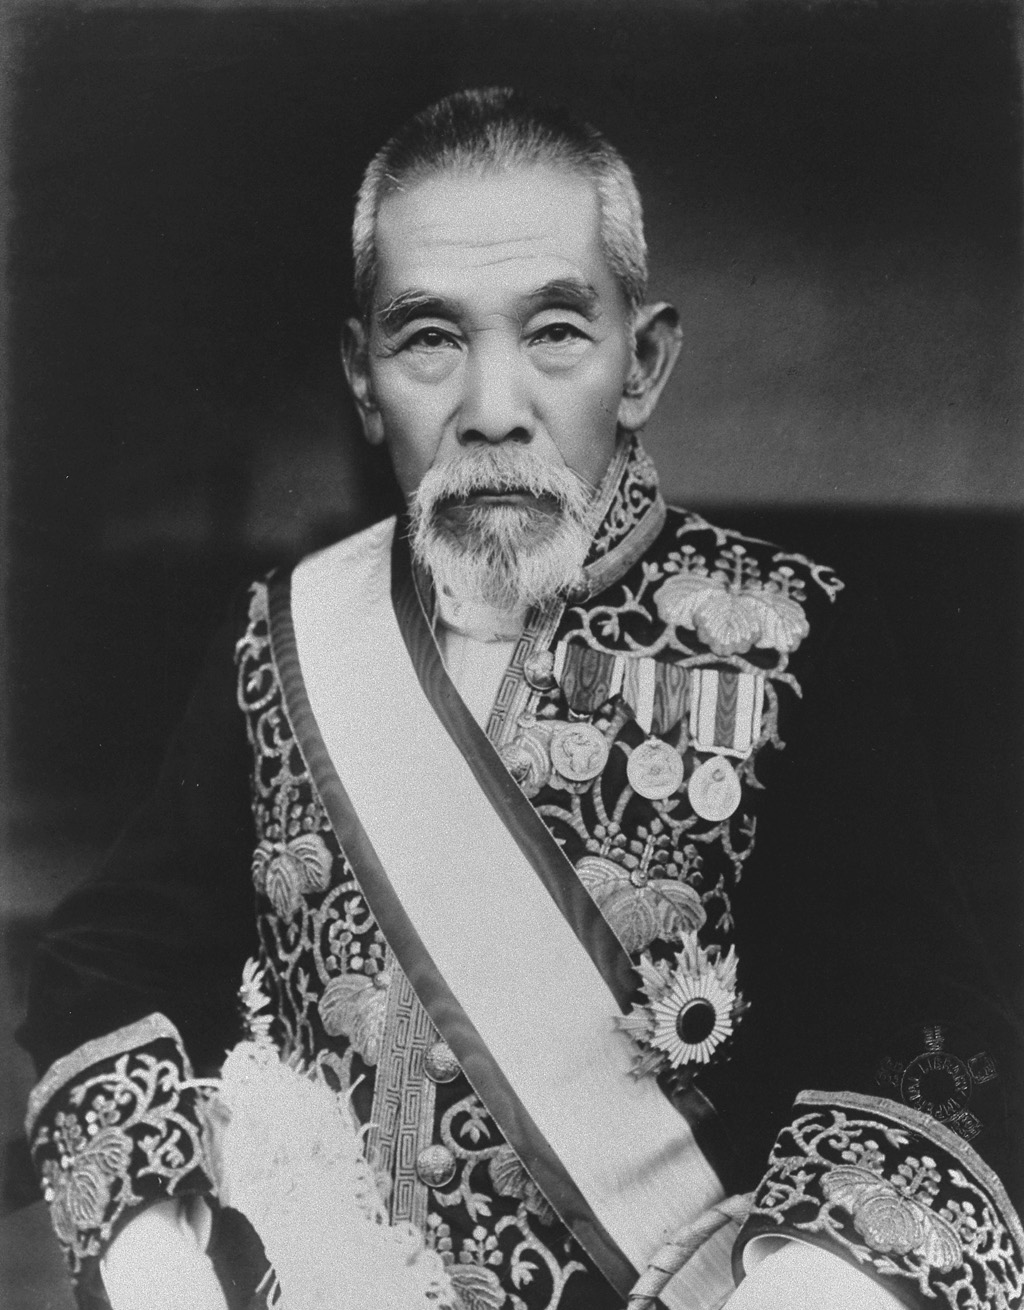 Portrait of INUKAI Tsuyoshi1